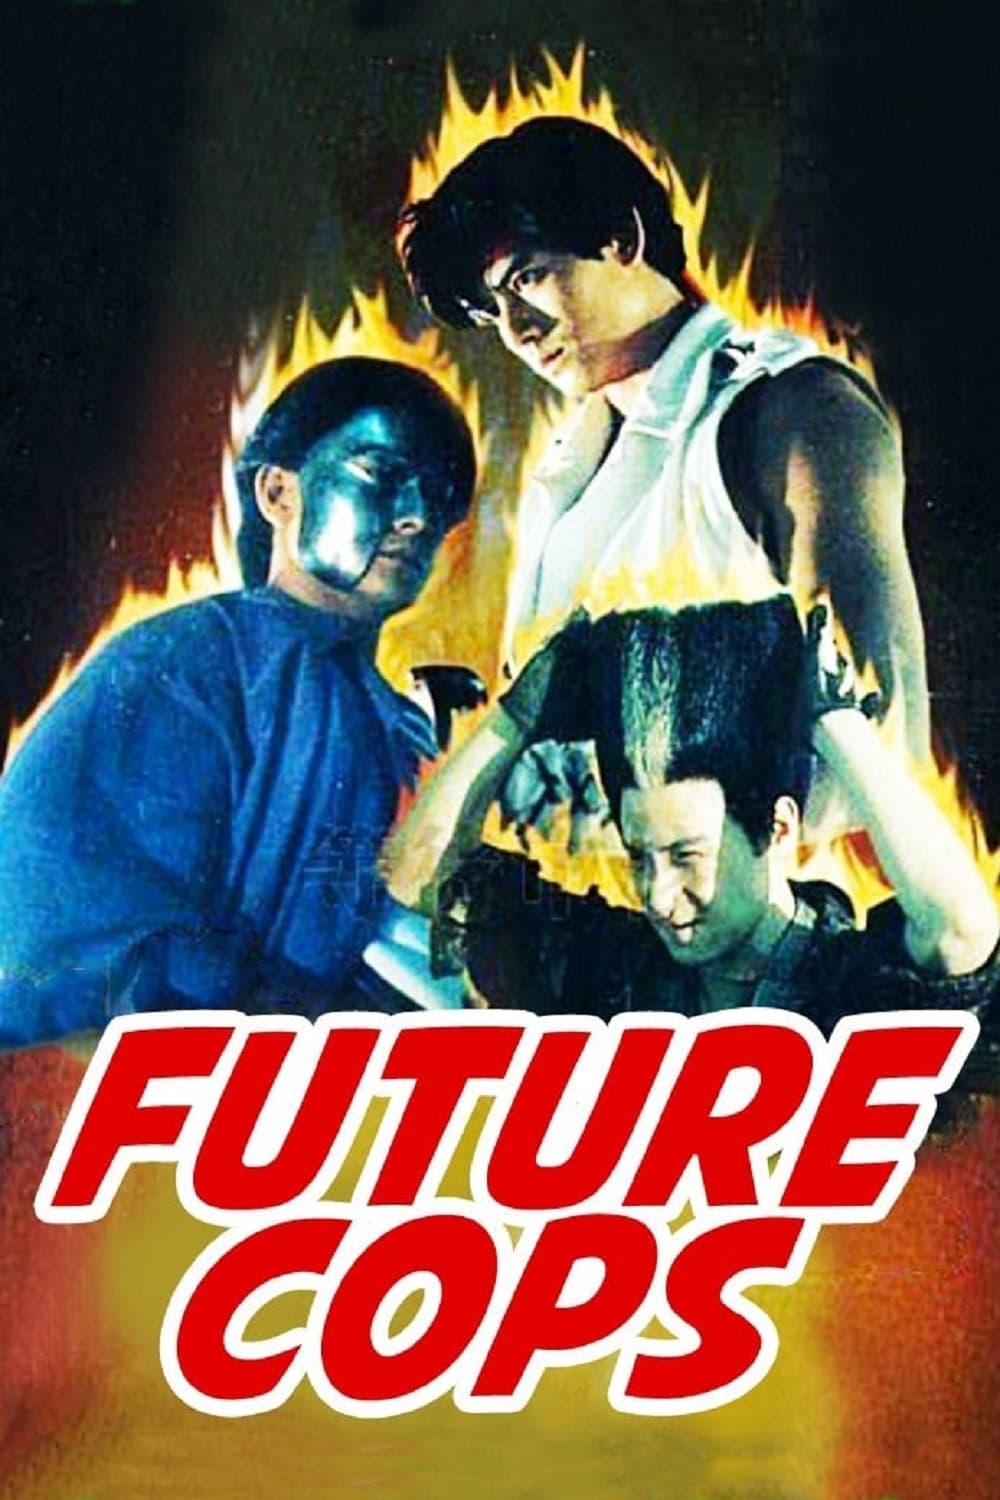 Future Cops (1993)